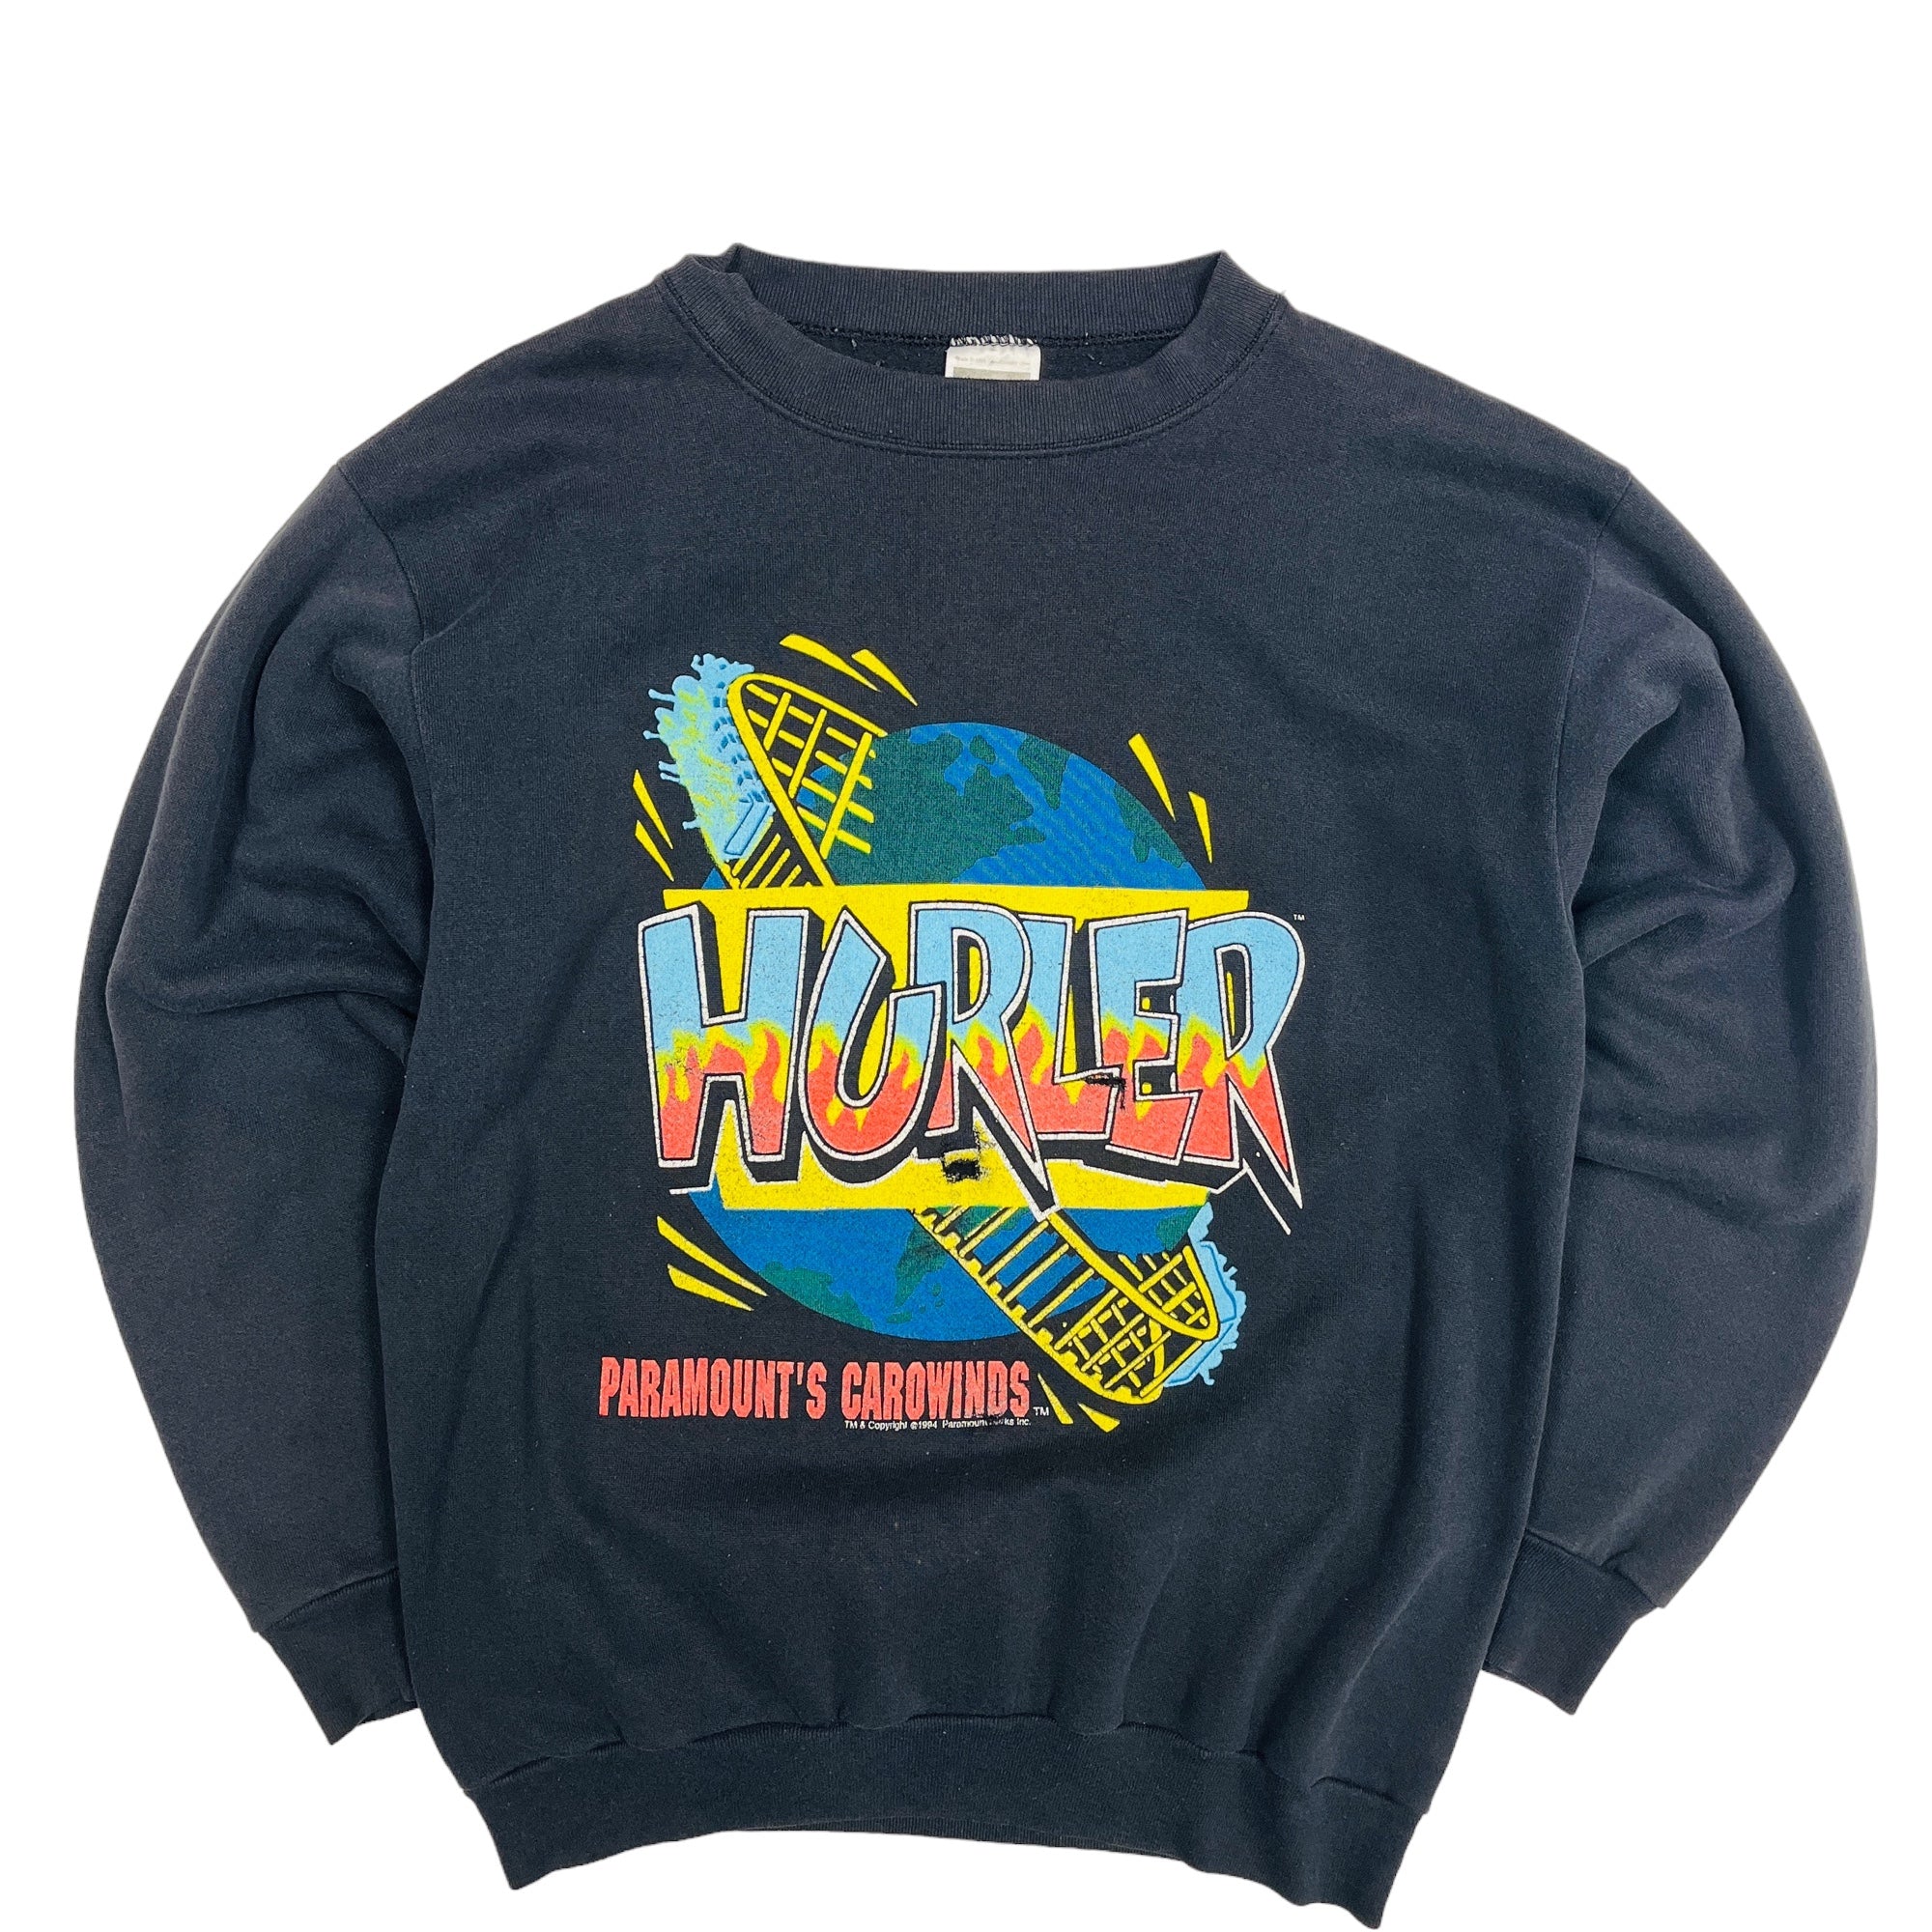 1994 Hurler Paramount Carowinds Rollercoaster Graphic Sweatshirt - Large